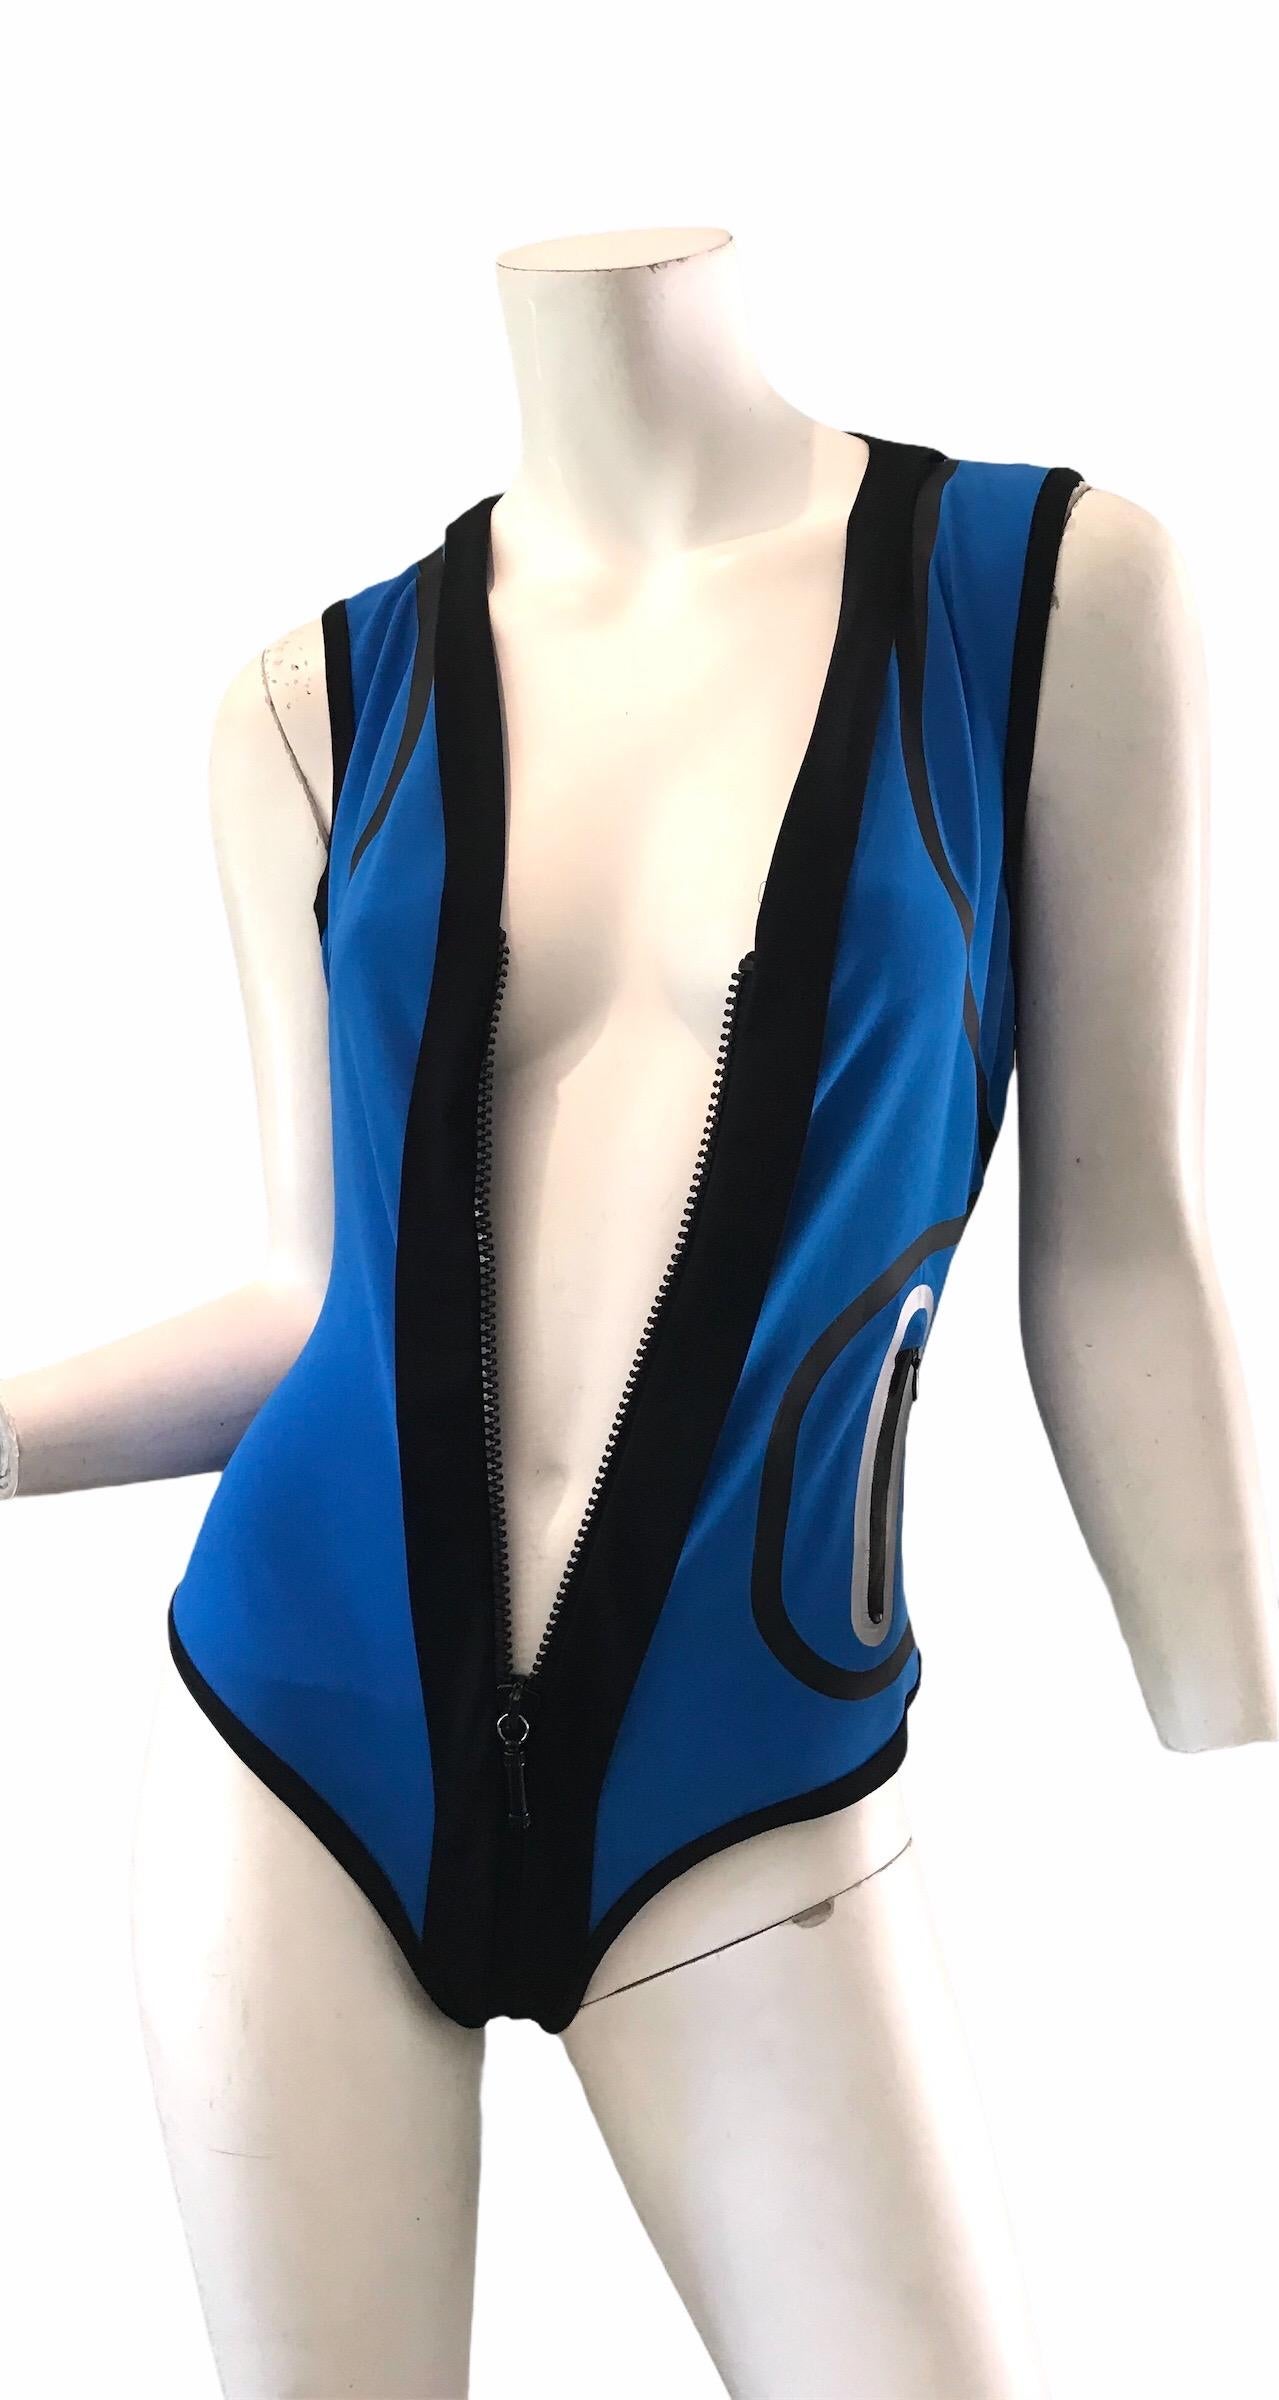 Balenciaga by Nicholas Ghesquiere bodysuit with zipper. Condition: Excellent. Size M